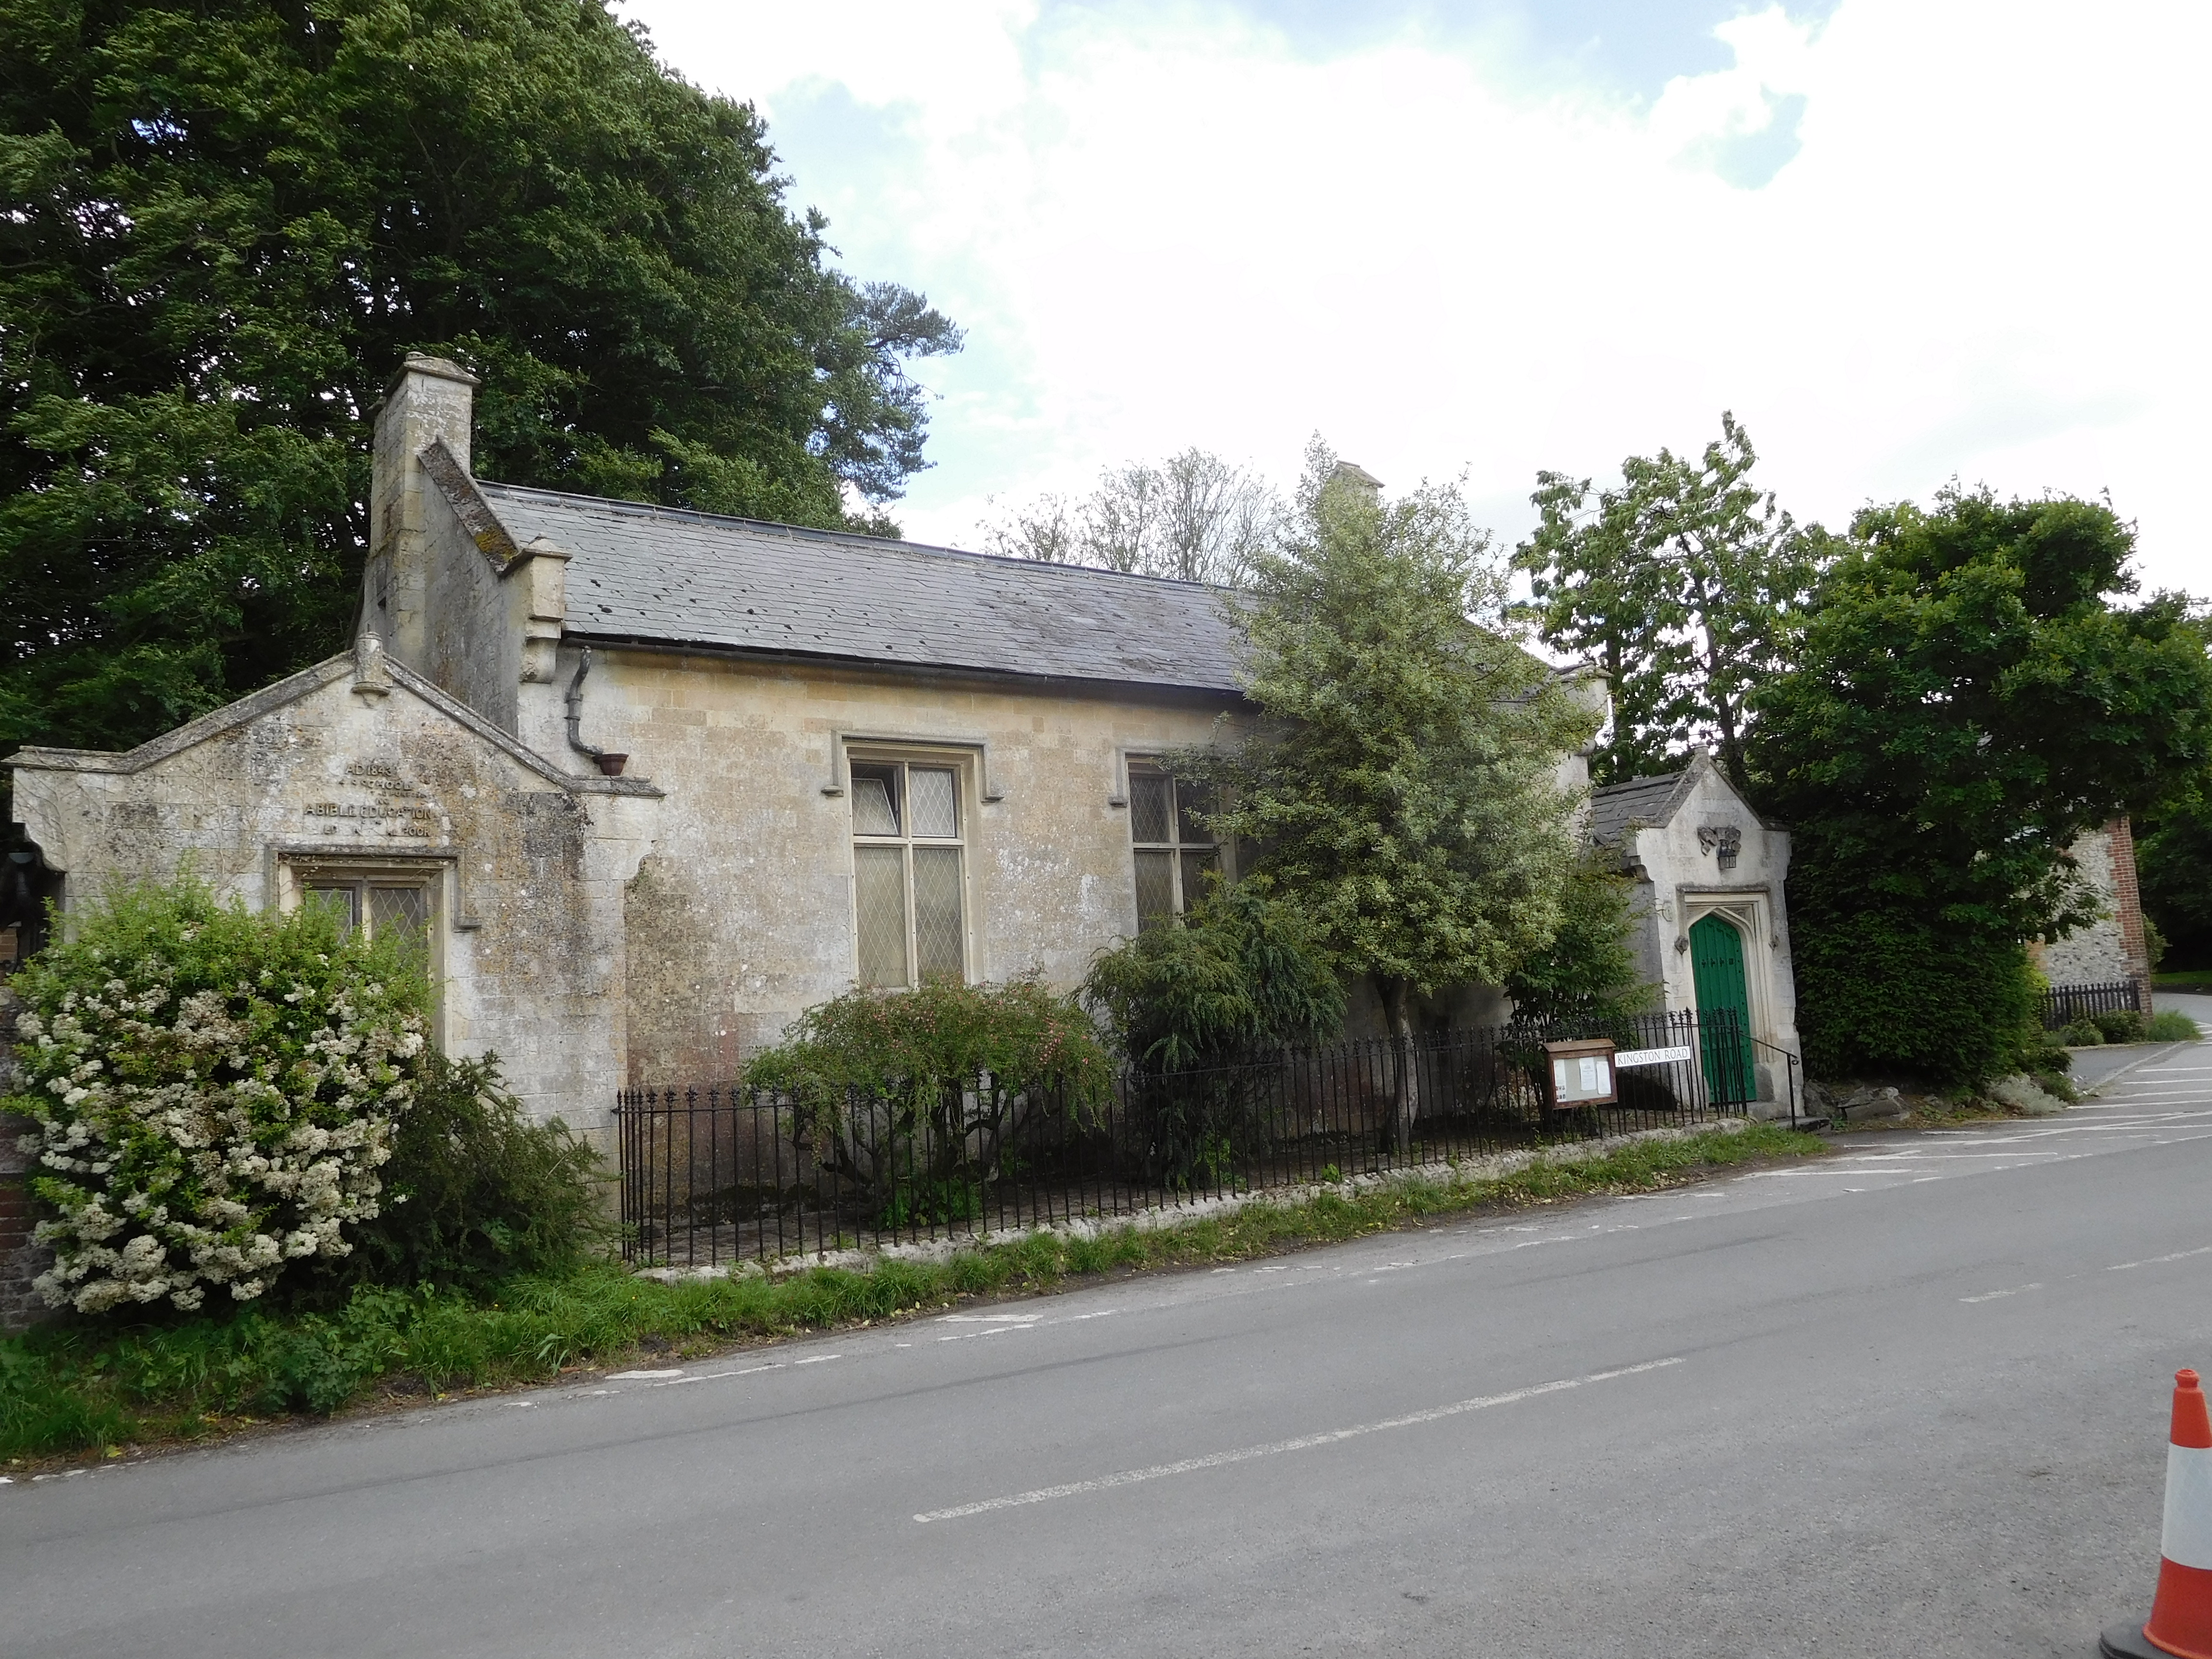 Shalbourne Village Hall